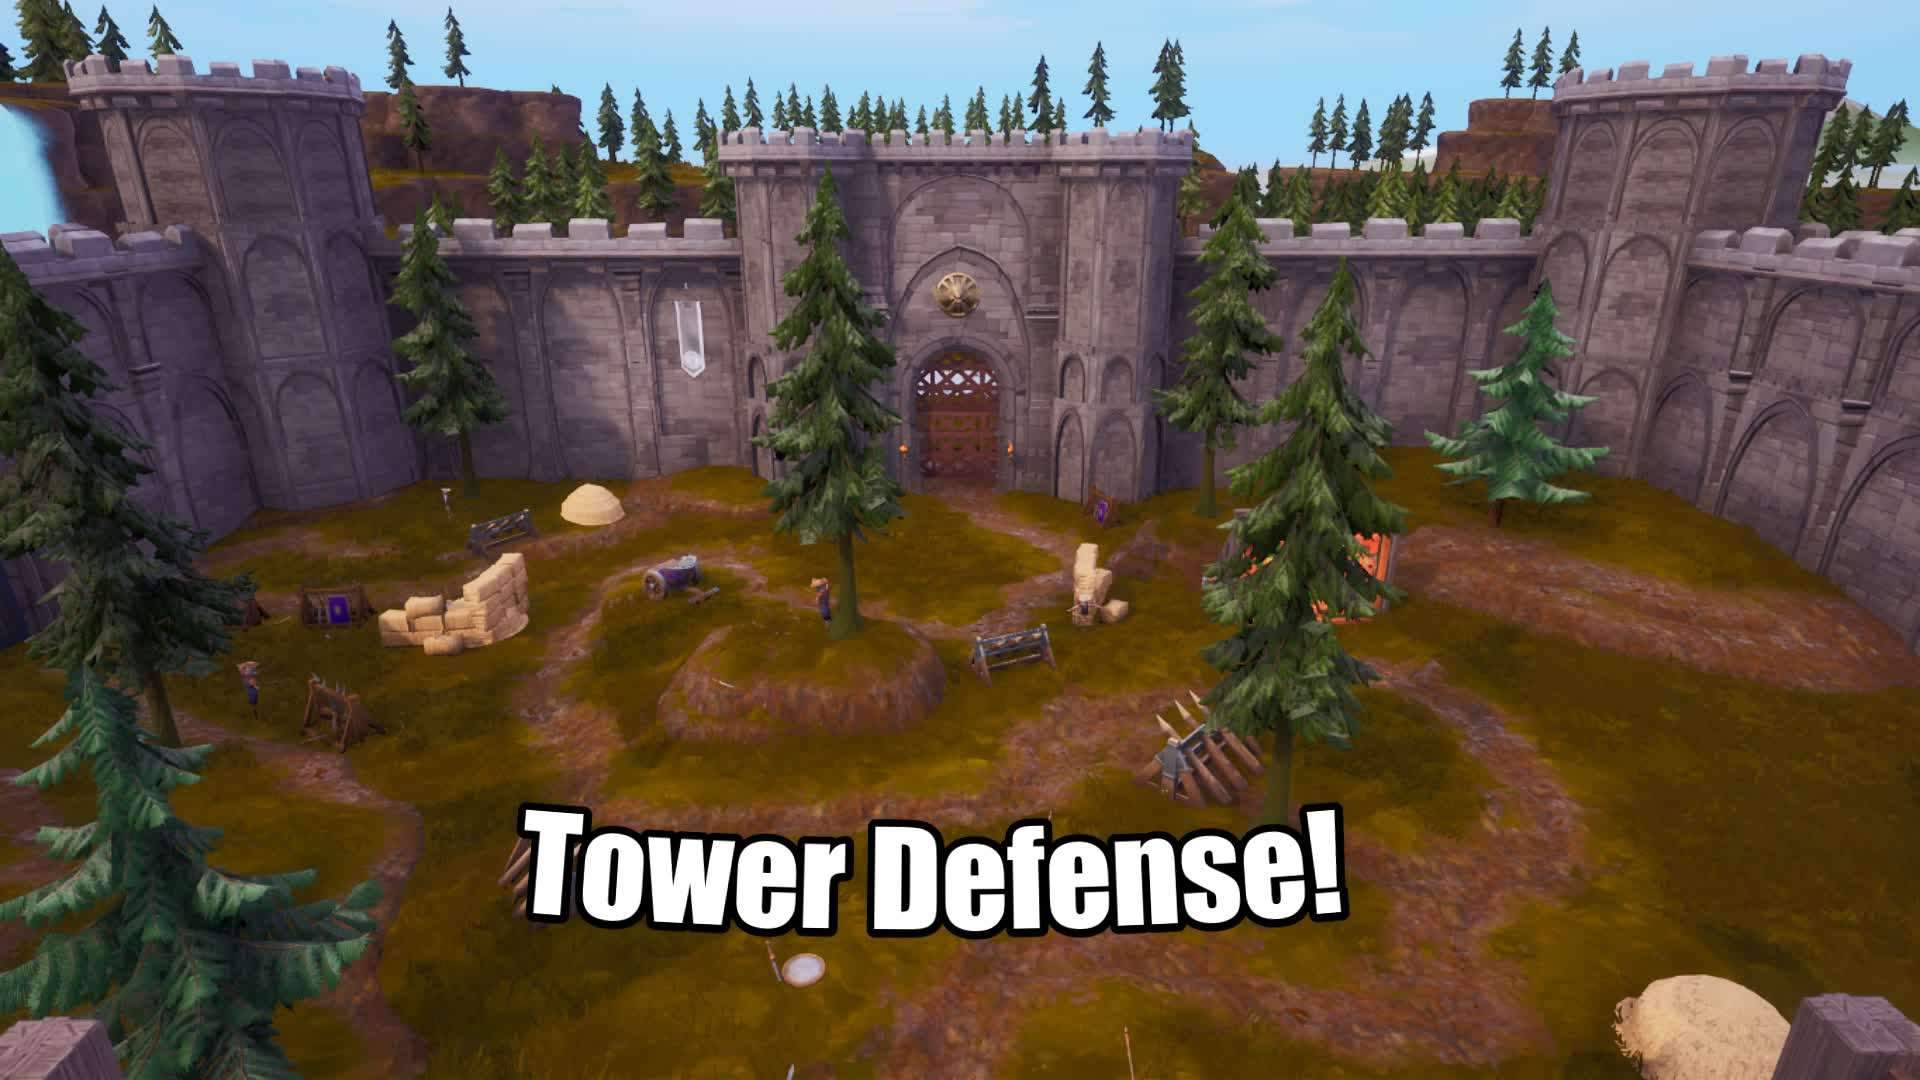 TOWER DEFENSE!